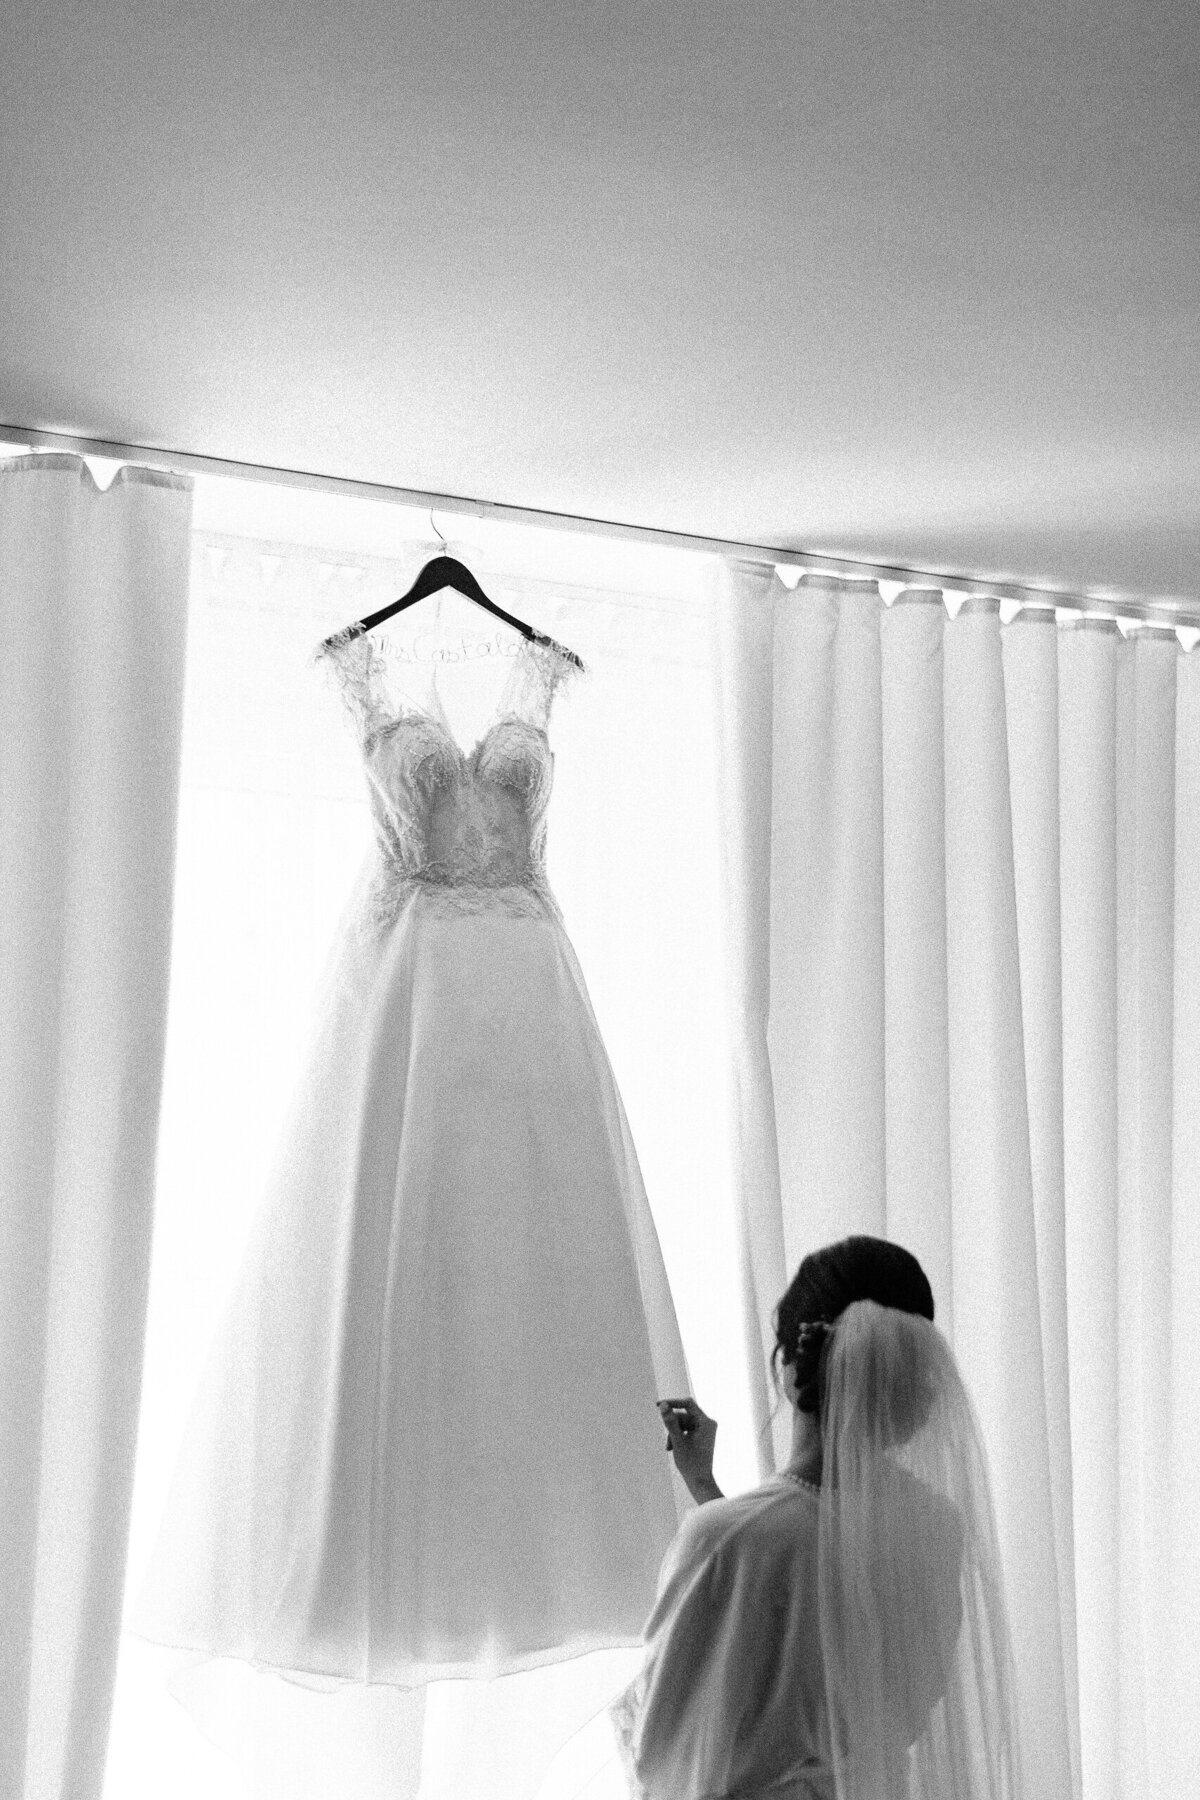 stunning dress hanging luxury wedding